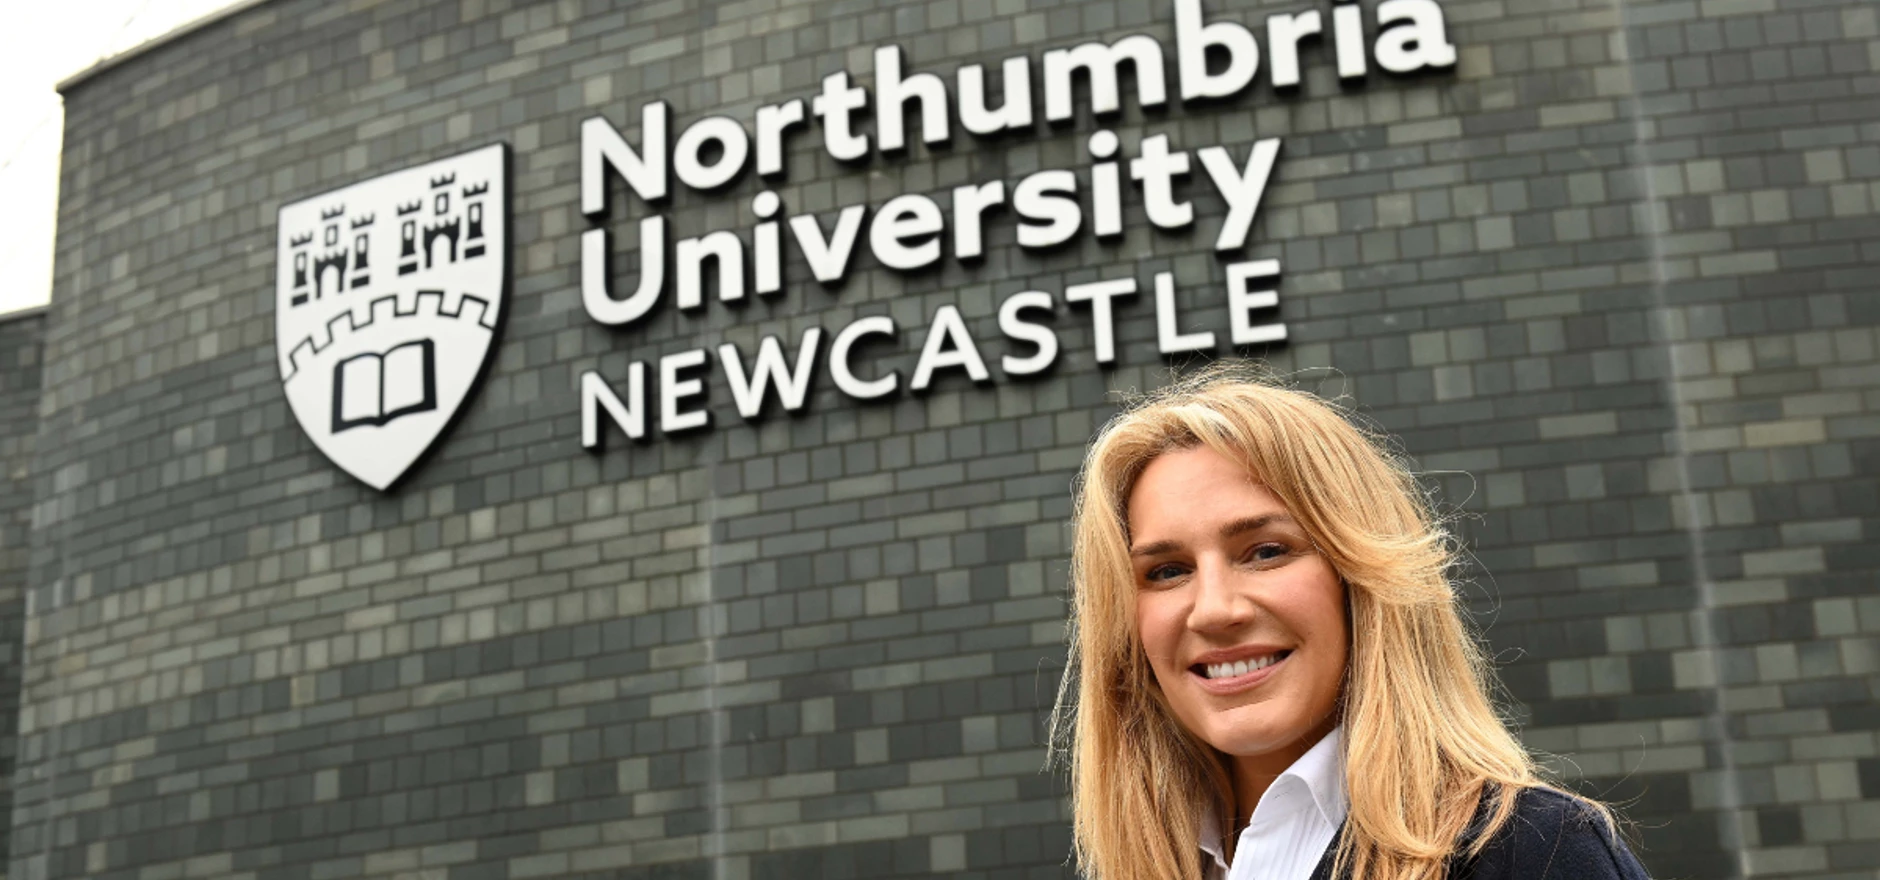 Nicola Elliott, founder of NEOM Organics London and graduate at Northumbria University